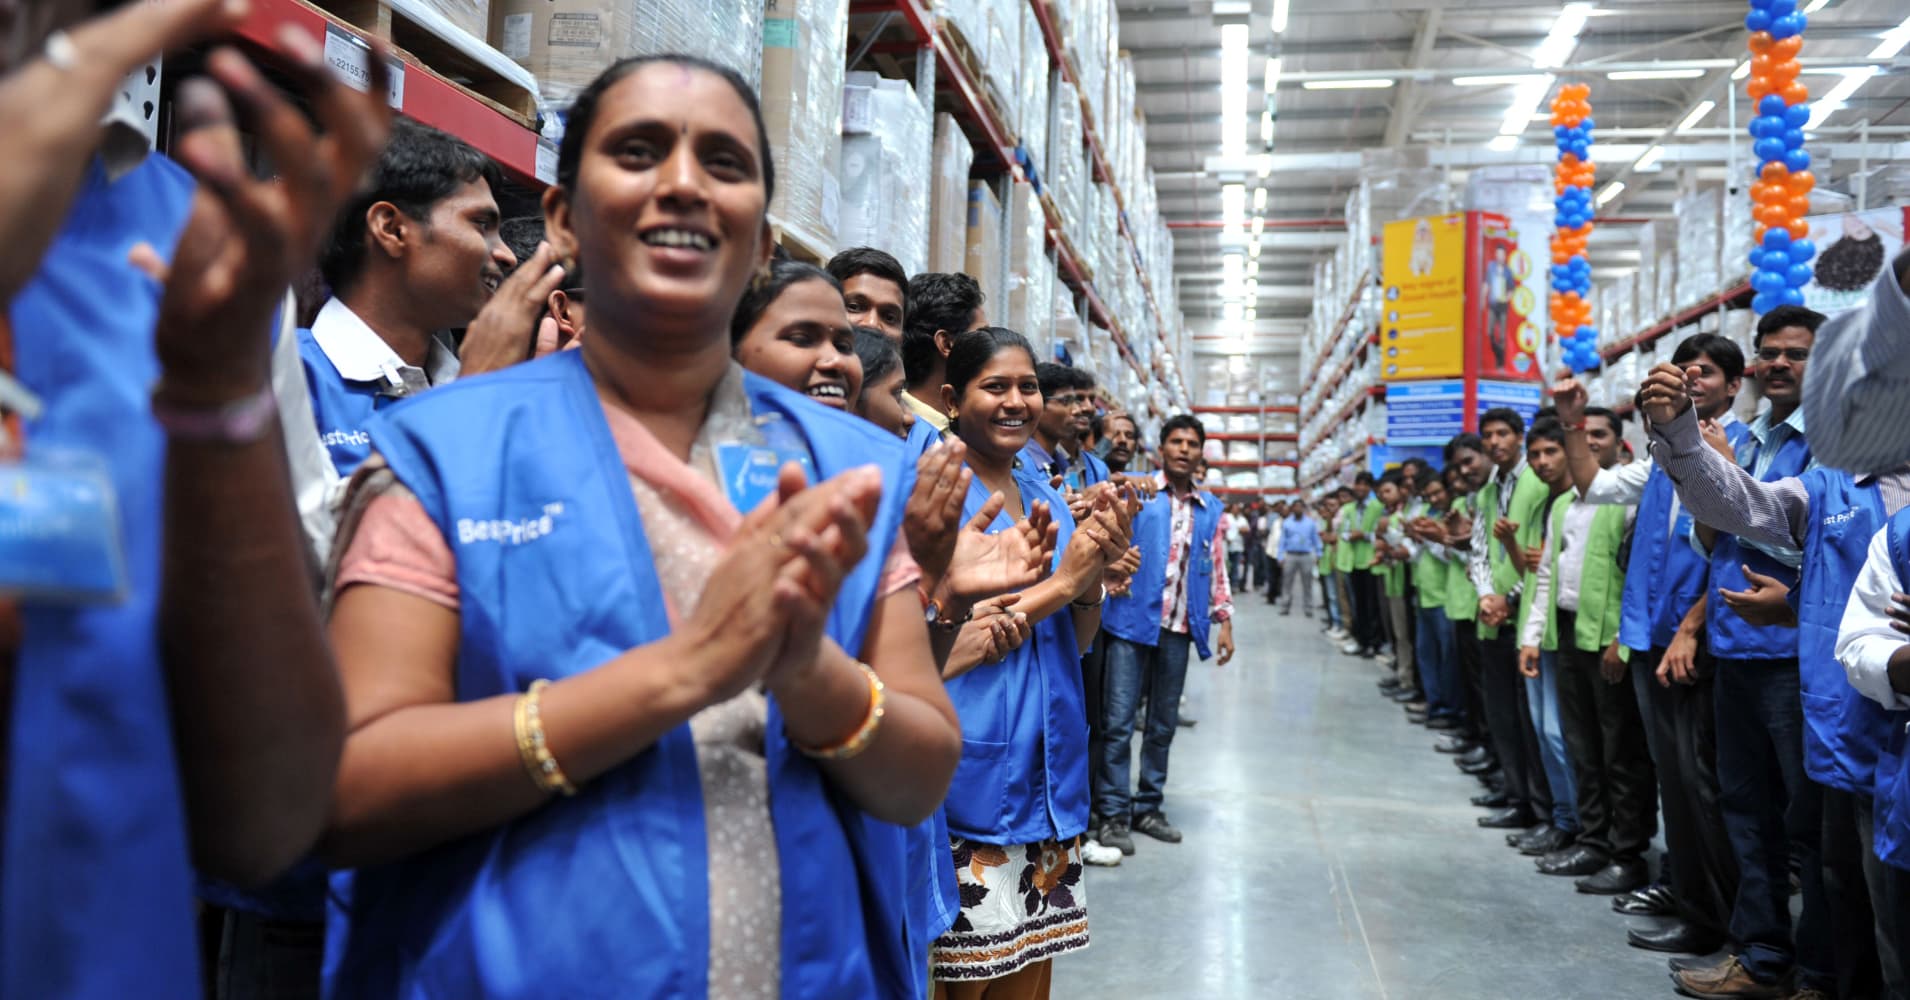 Walmart Suspends India Employees